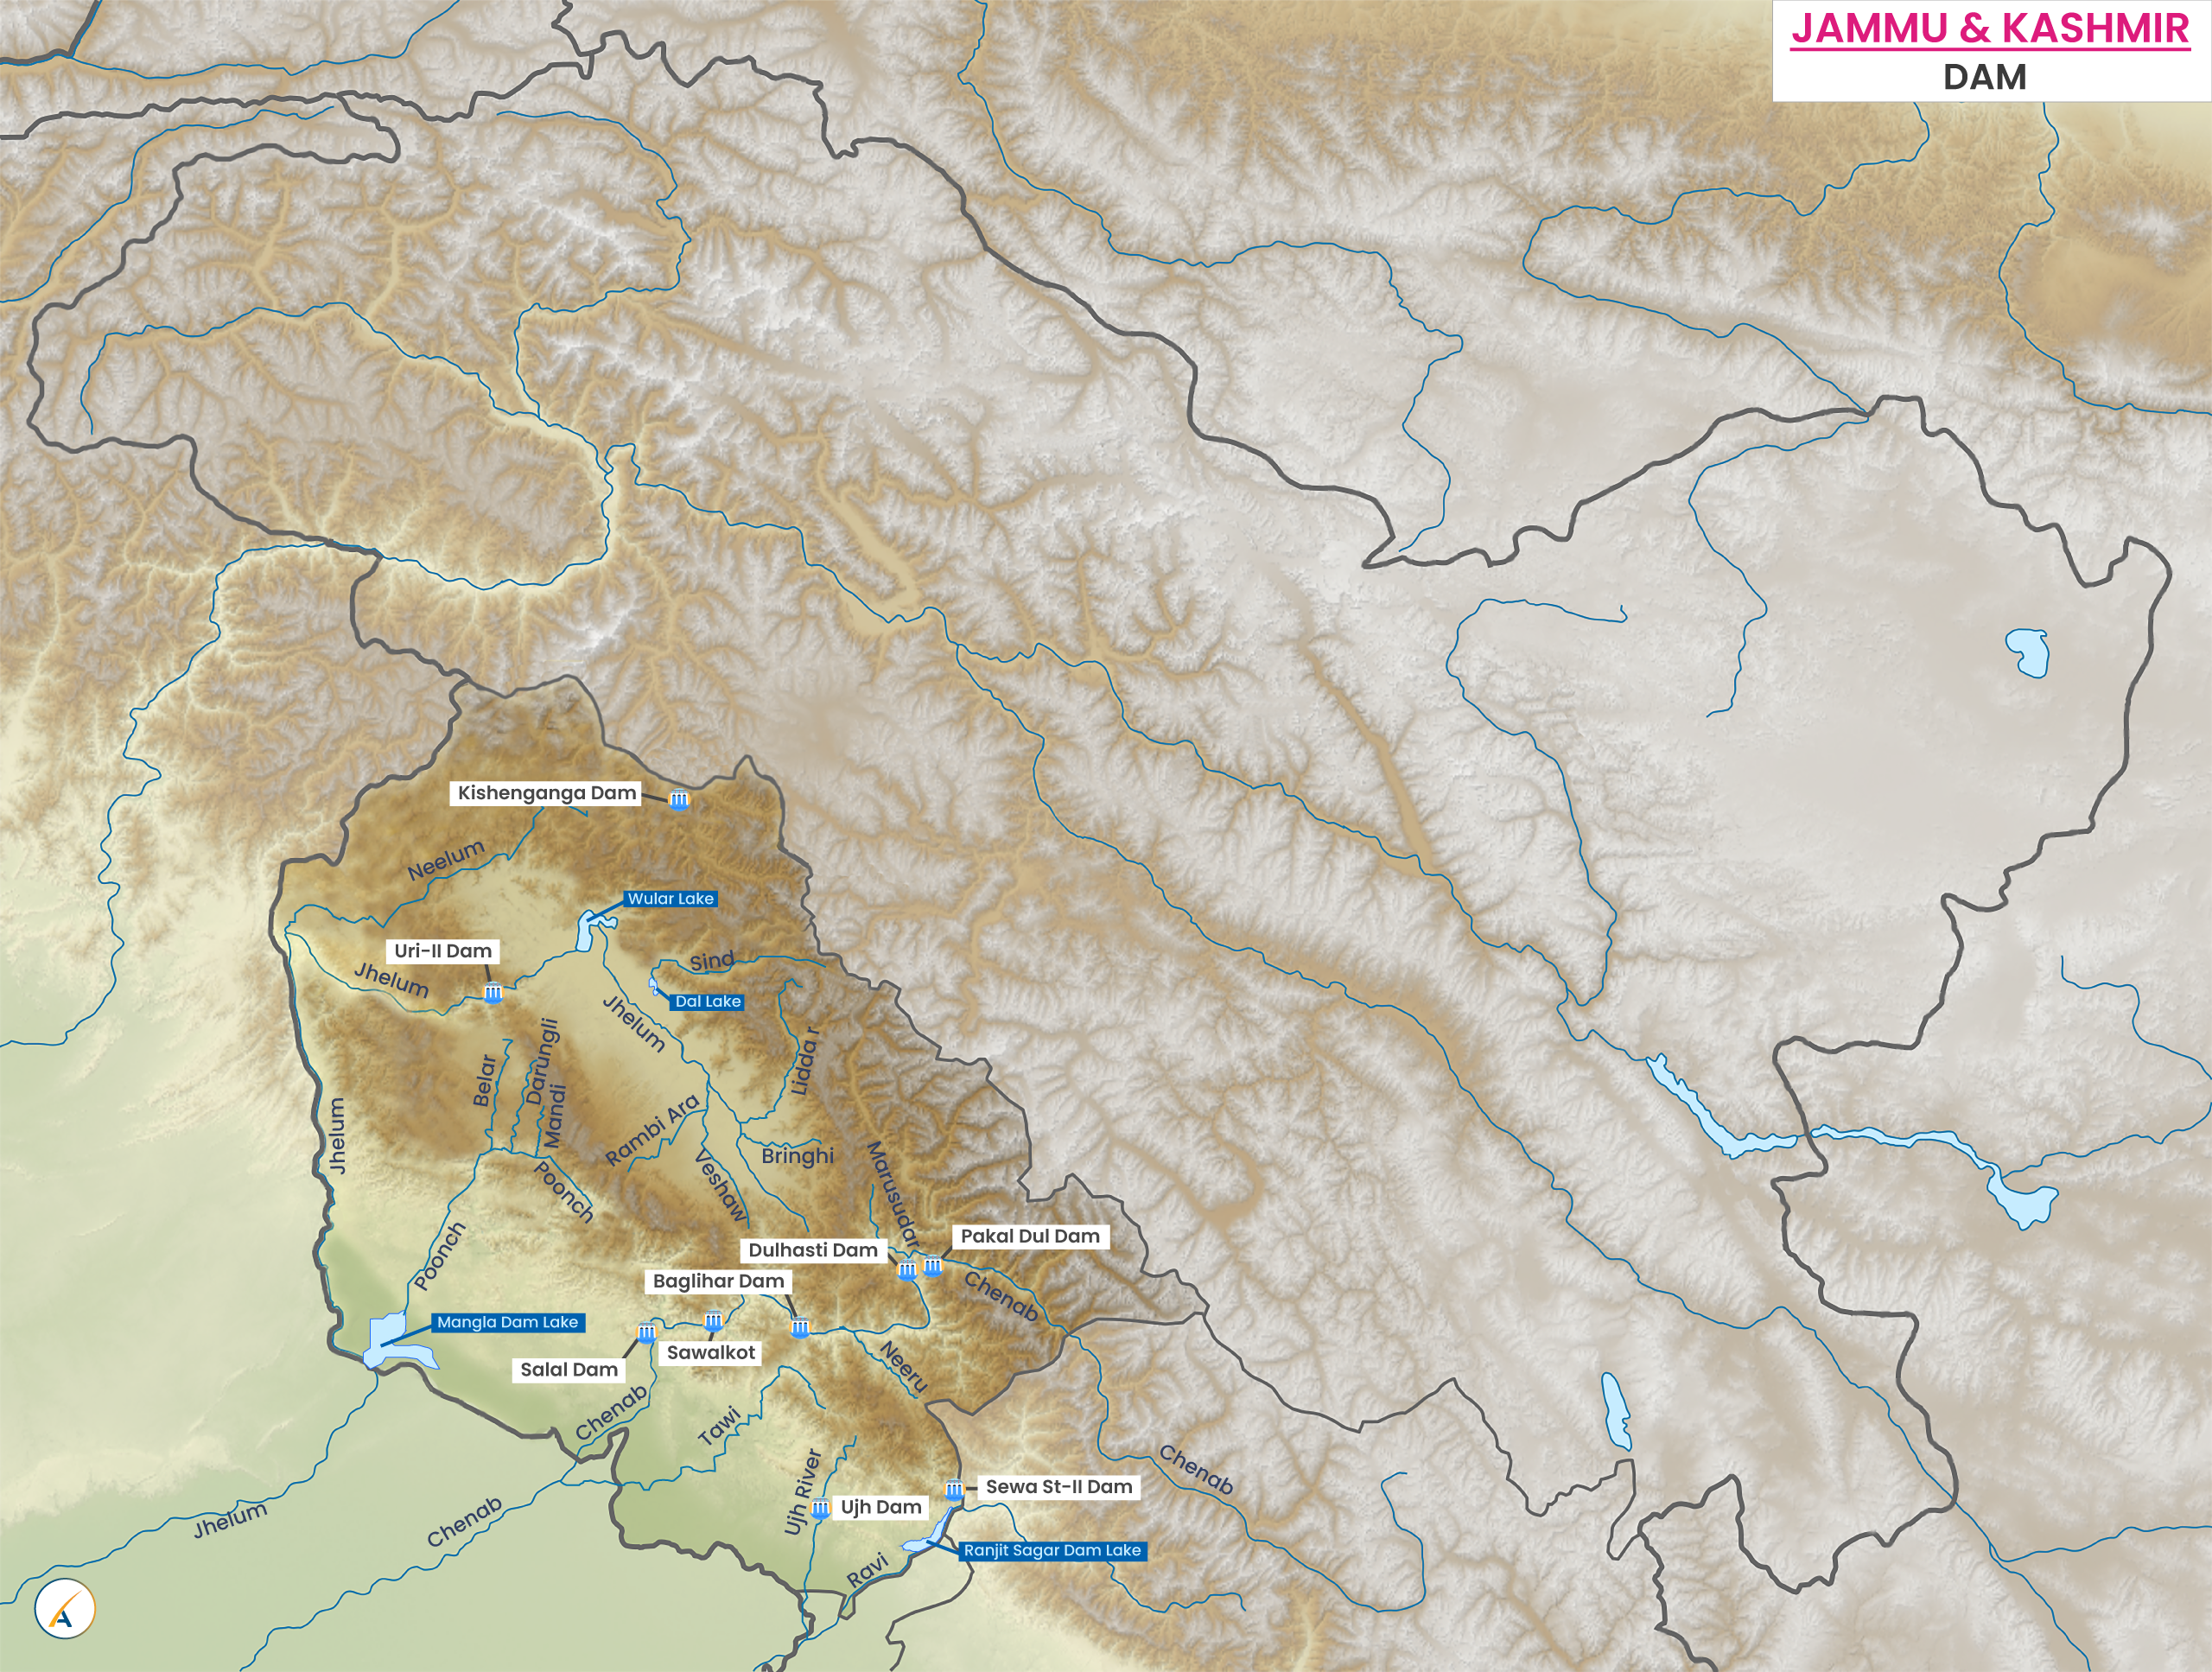 Major Dams in Jammu and Kashmir